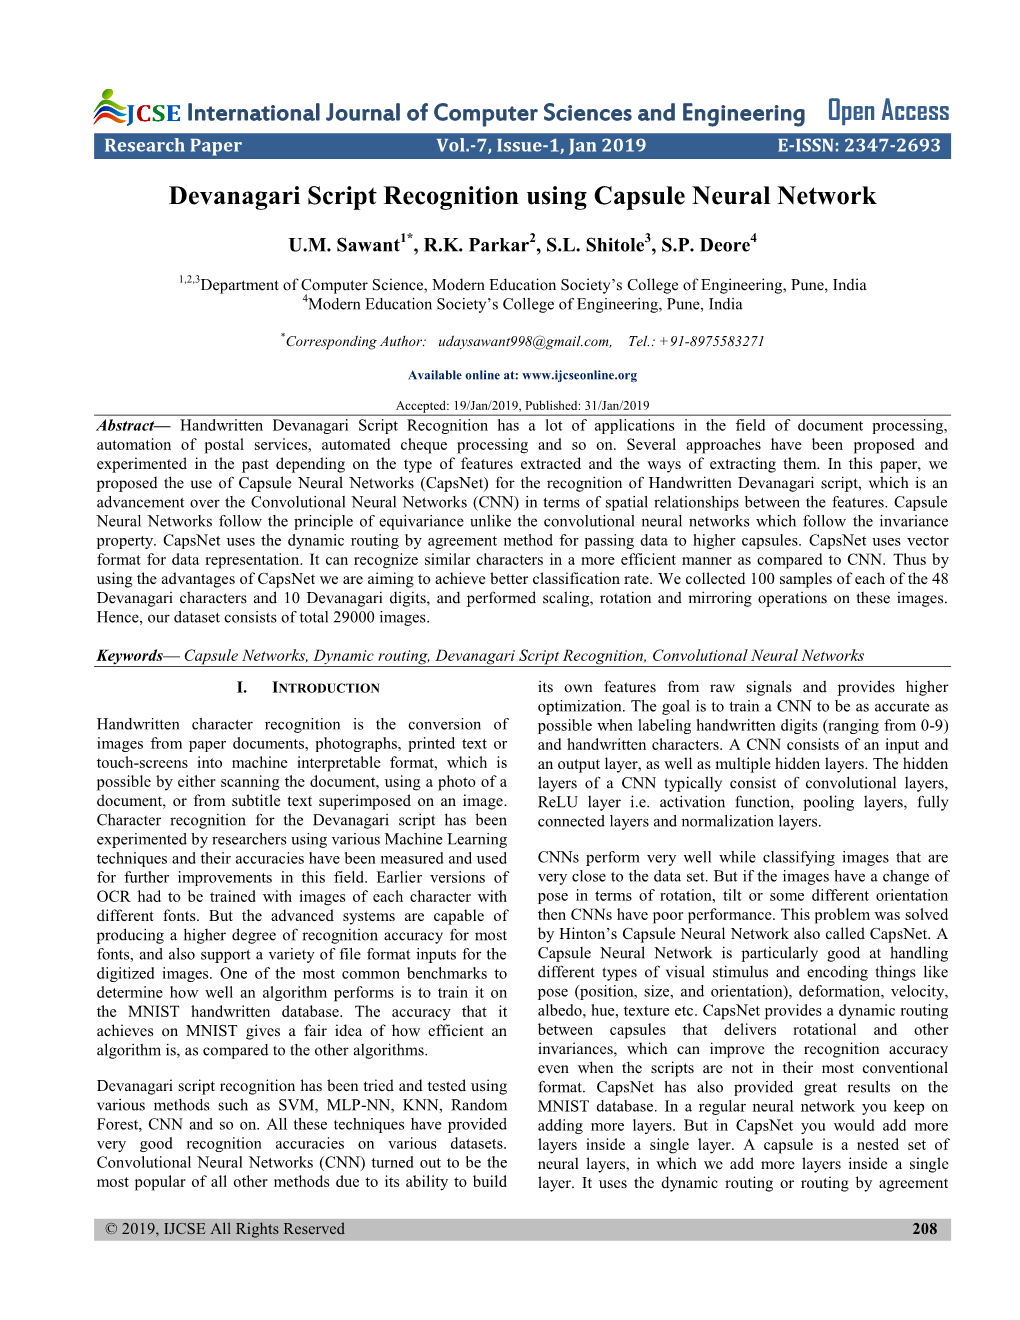 Devanagari Script Recognition Using Capsule Neural Network